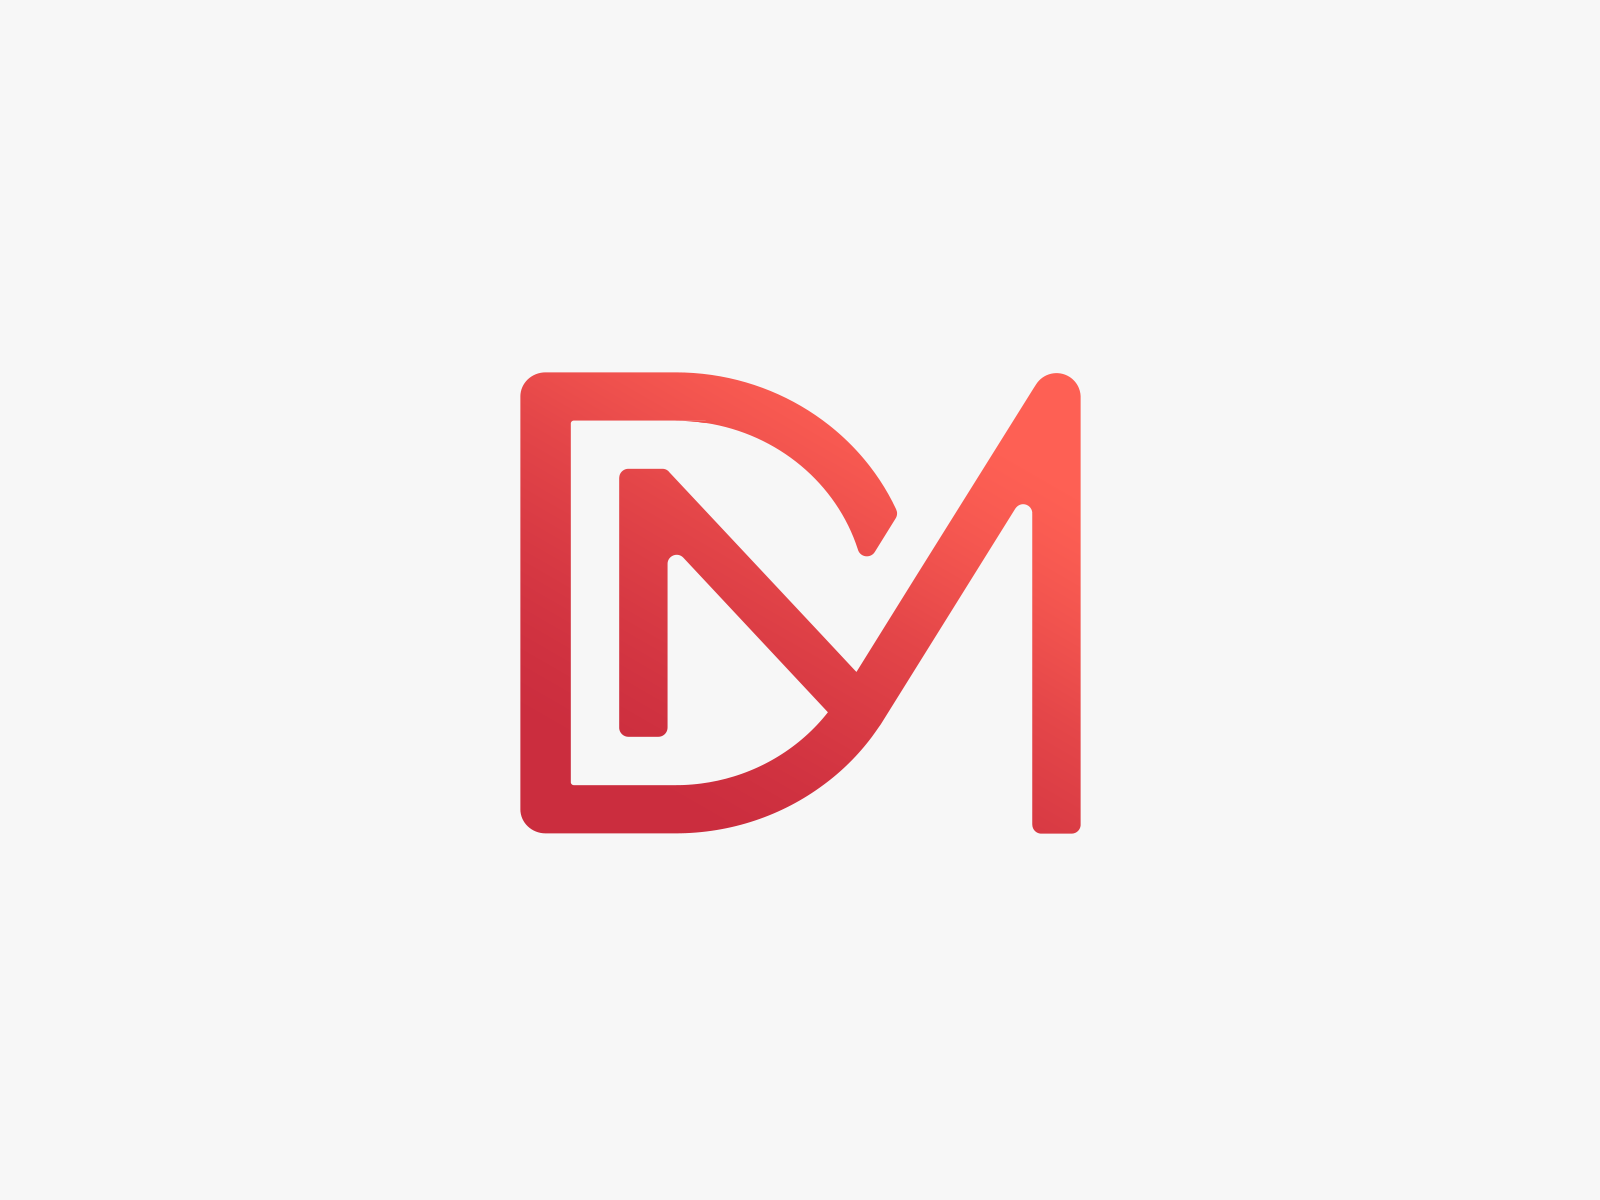 DM Monogram Logo Design by Zan Khan on Dribbble